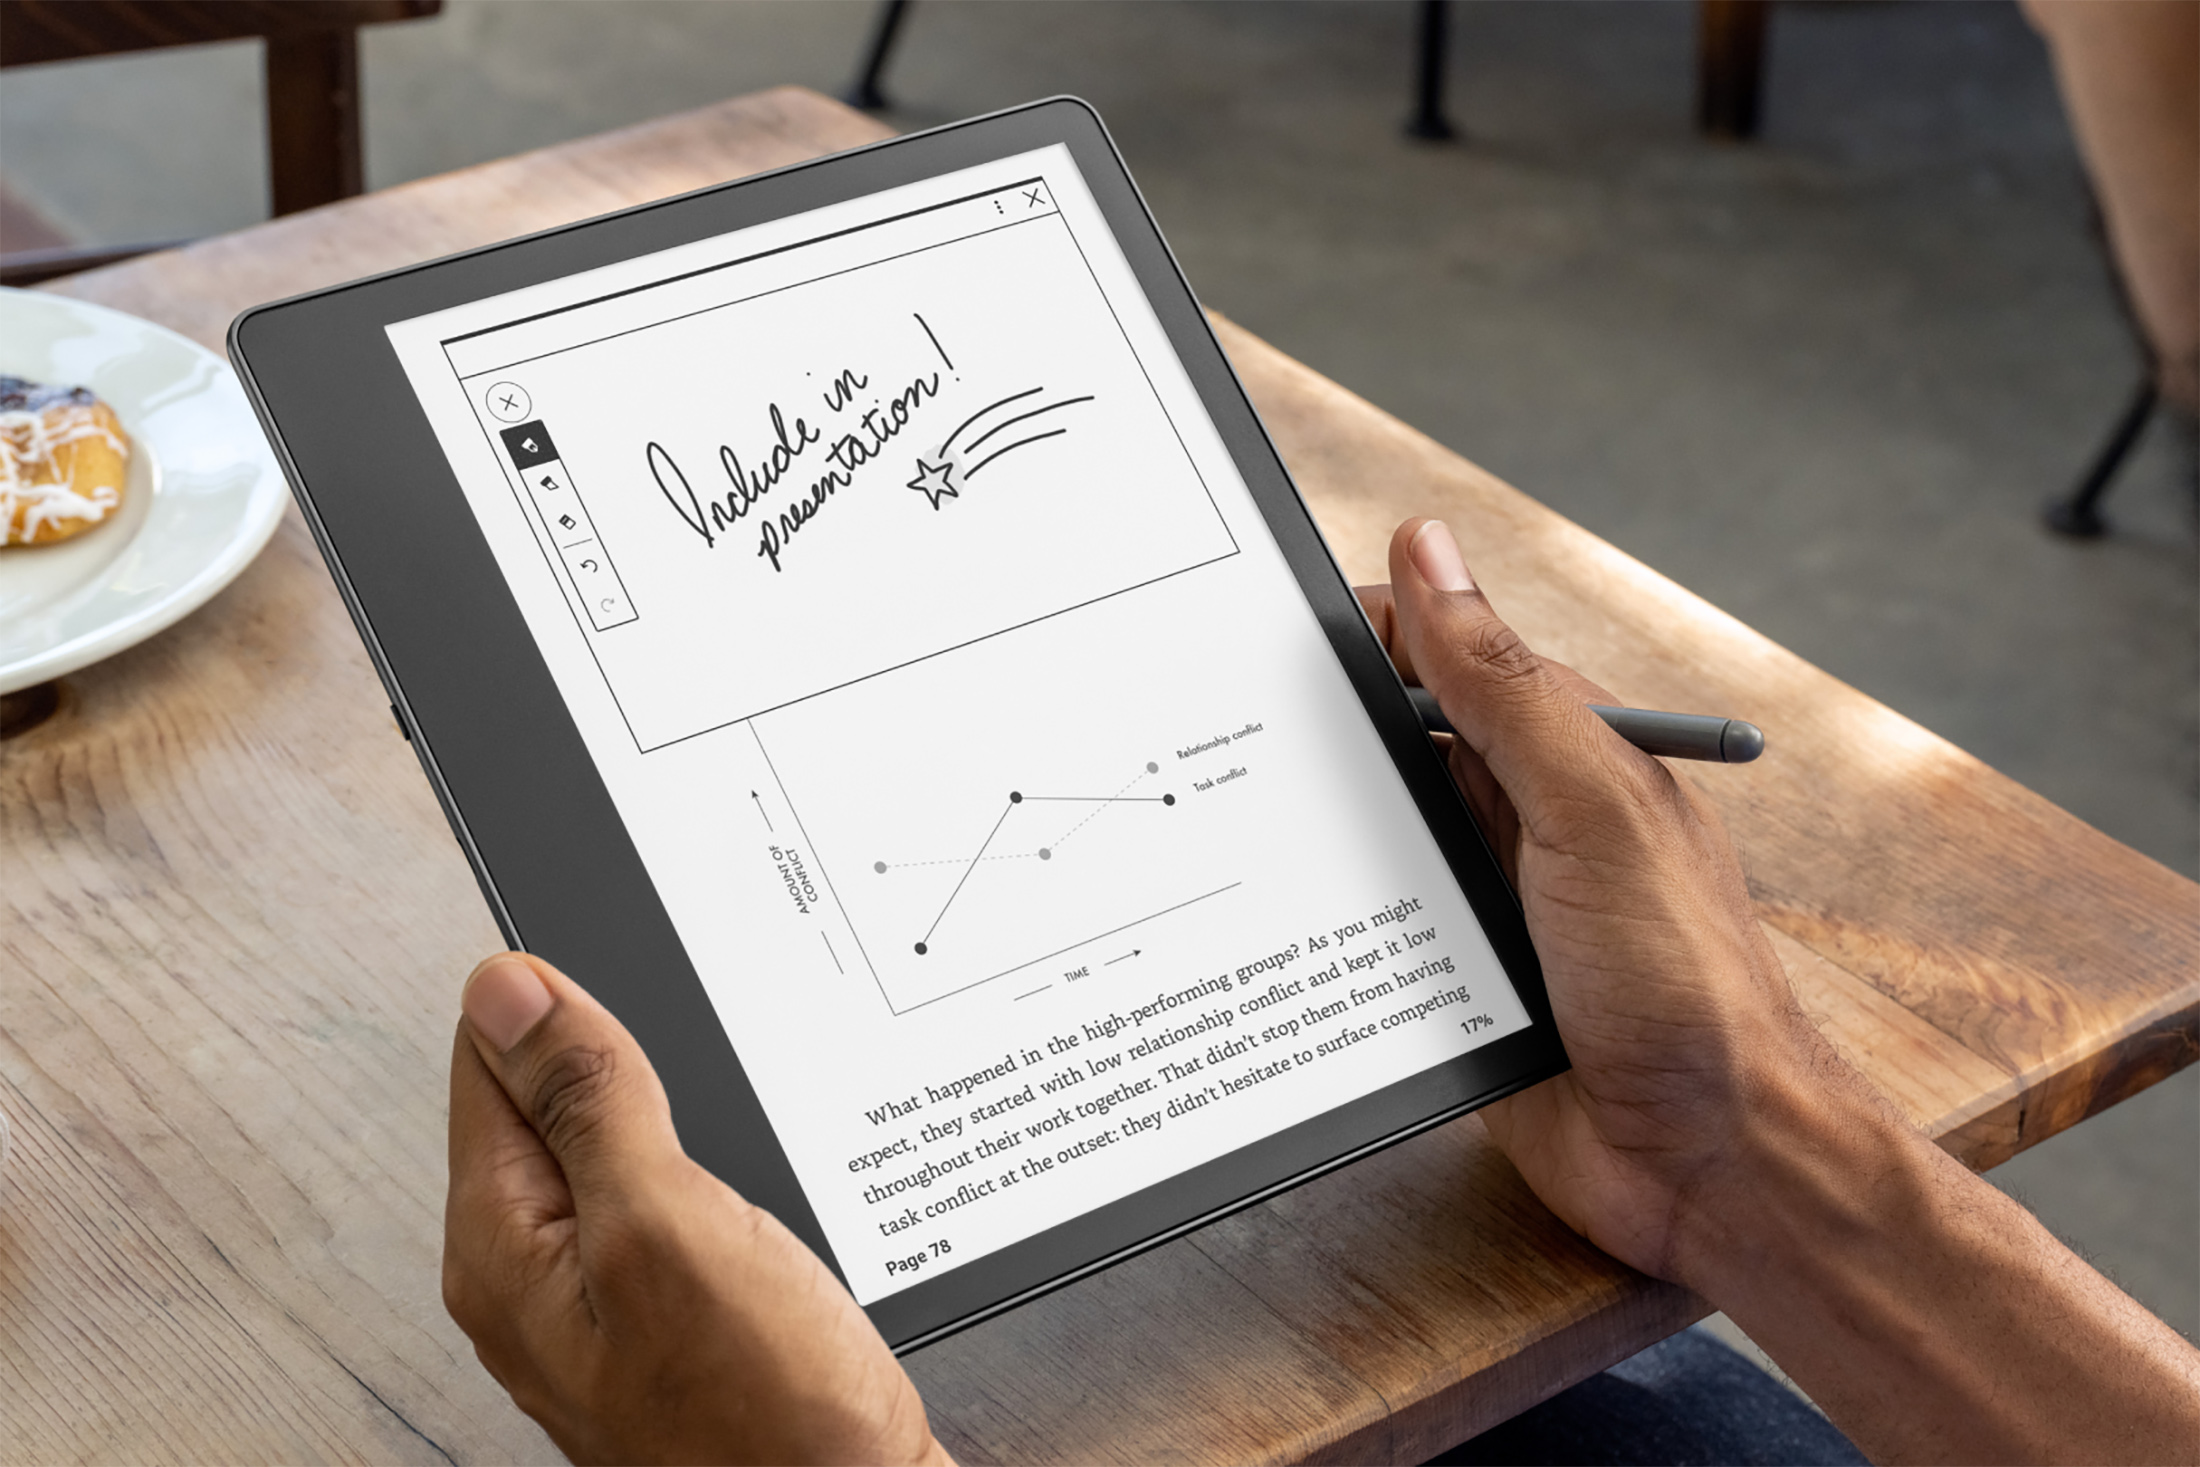 Metal Pen Nib for Kindles Scribe Write Stylus Pen Digital Tablets